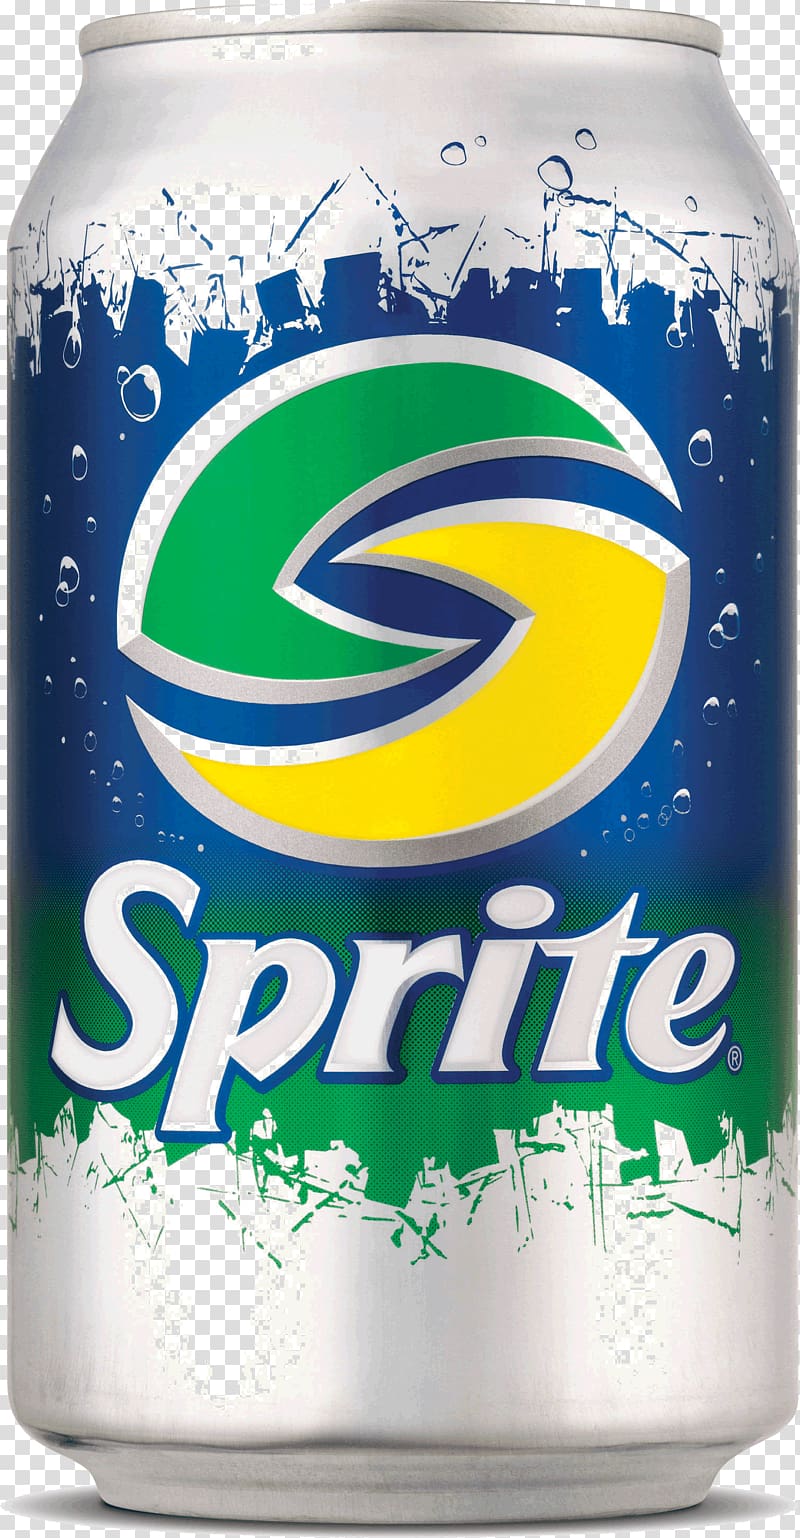 Soft drink Coca-Cola Sprite Lemon-lime drink Beverage can, Sprite can transparent background PNG clipart